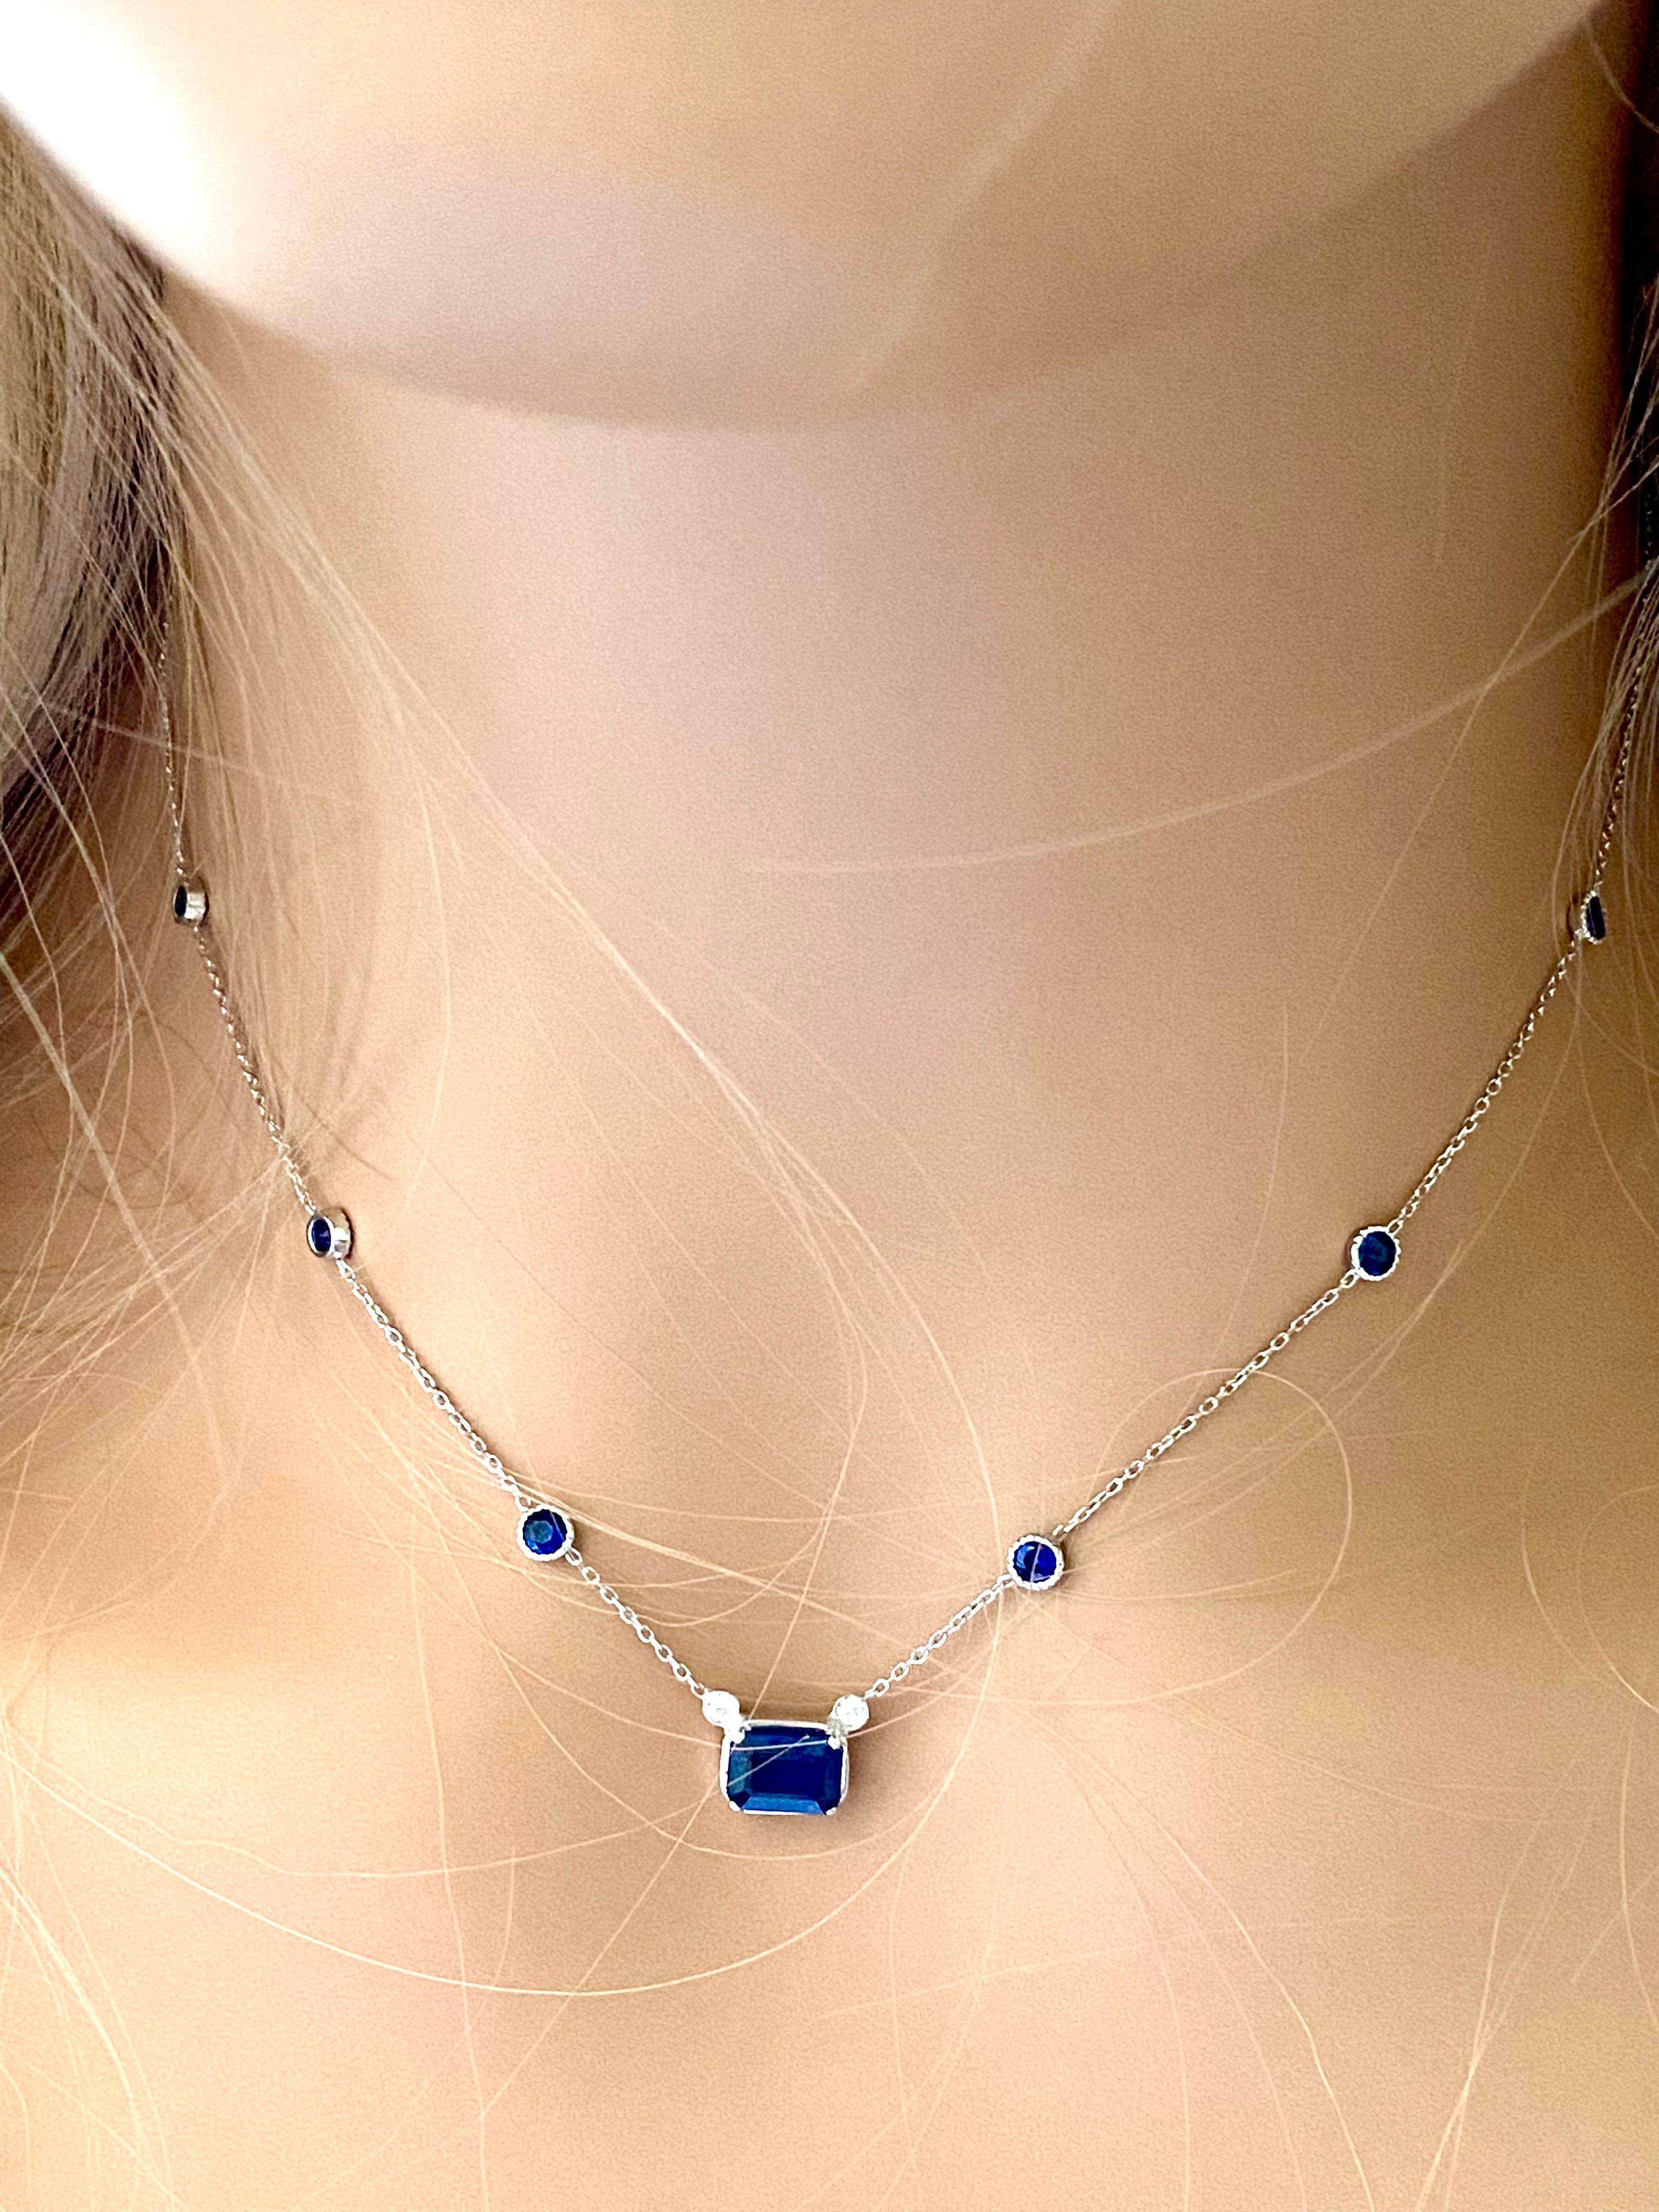 White Gold Necklace Pendant Emerald Shaped Sapphire Diamonds Six Bezel Sapphire 2